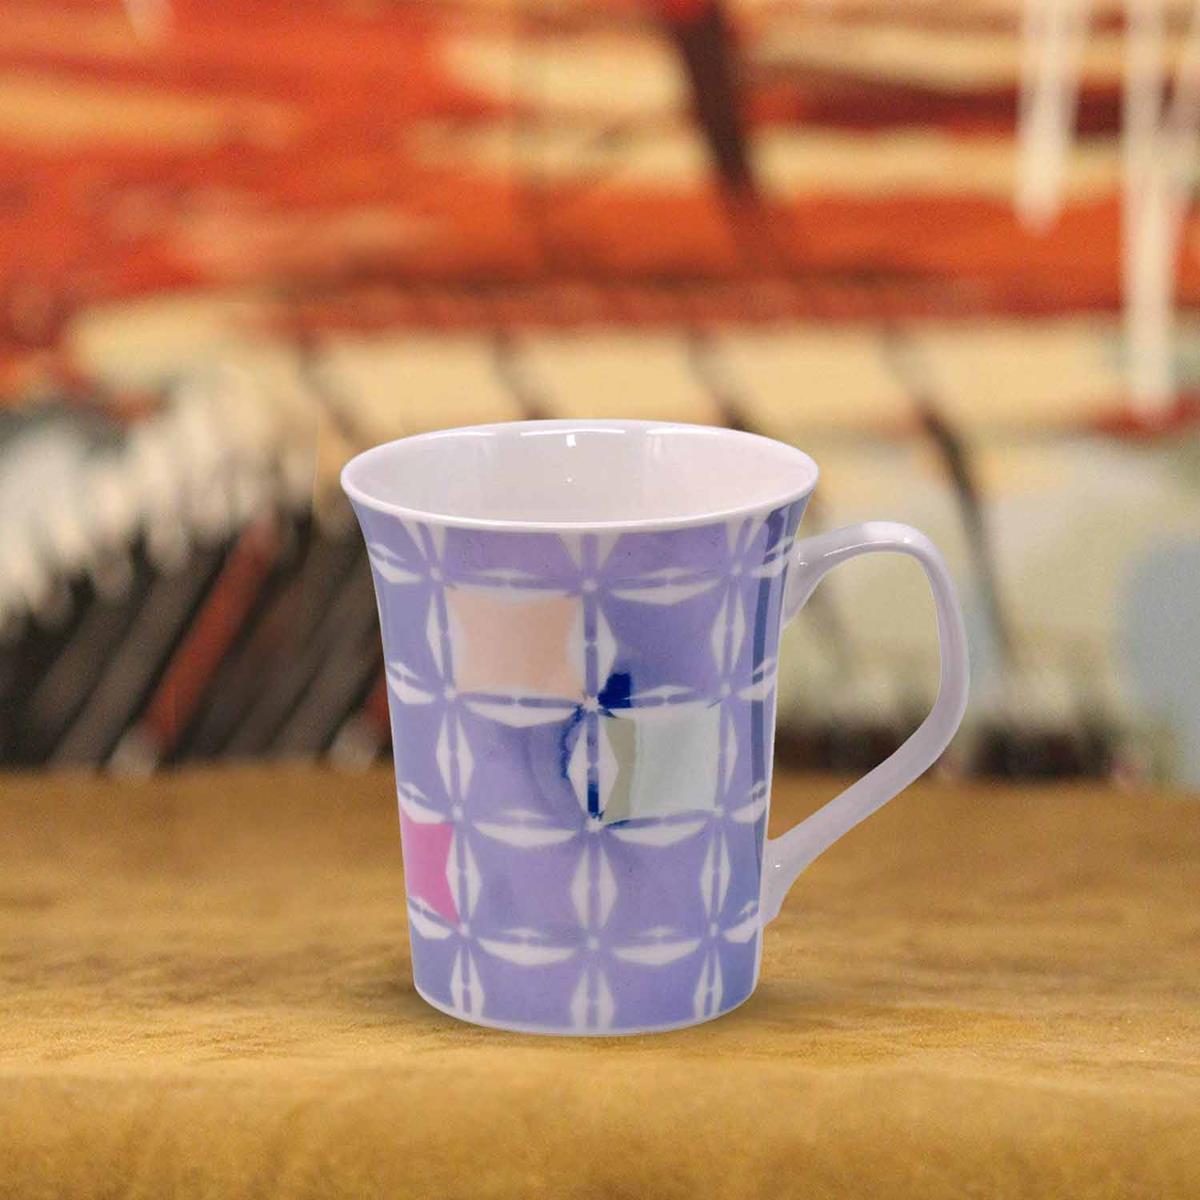 Printed Ceramic Tall Coffee or Tea Mug with handle - 325ml (4118-D)